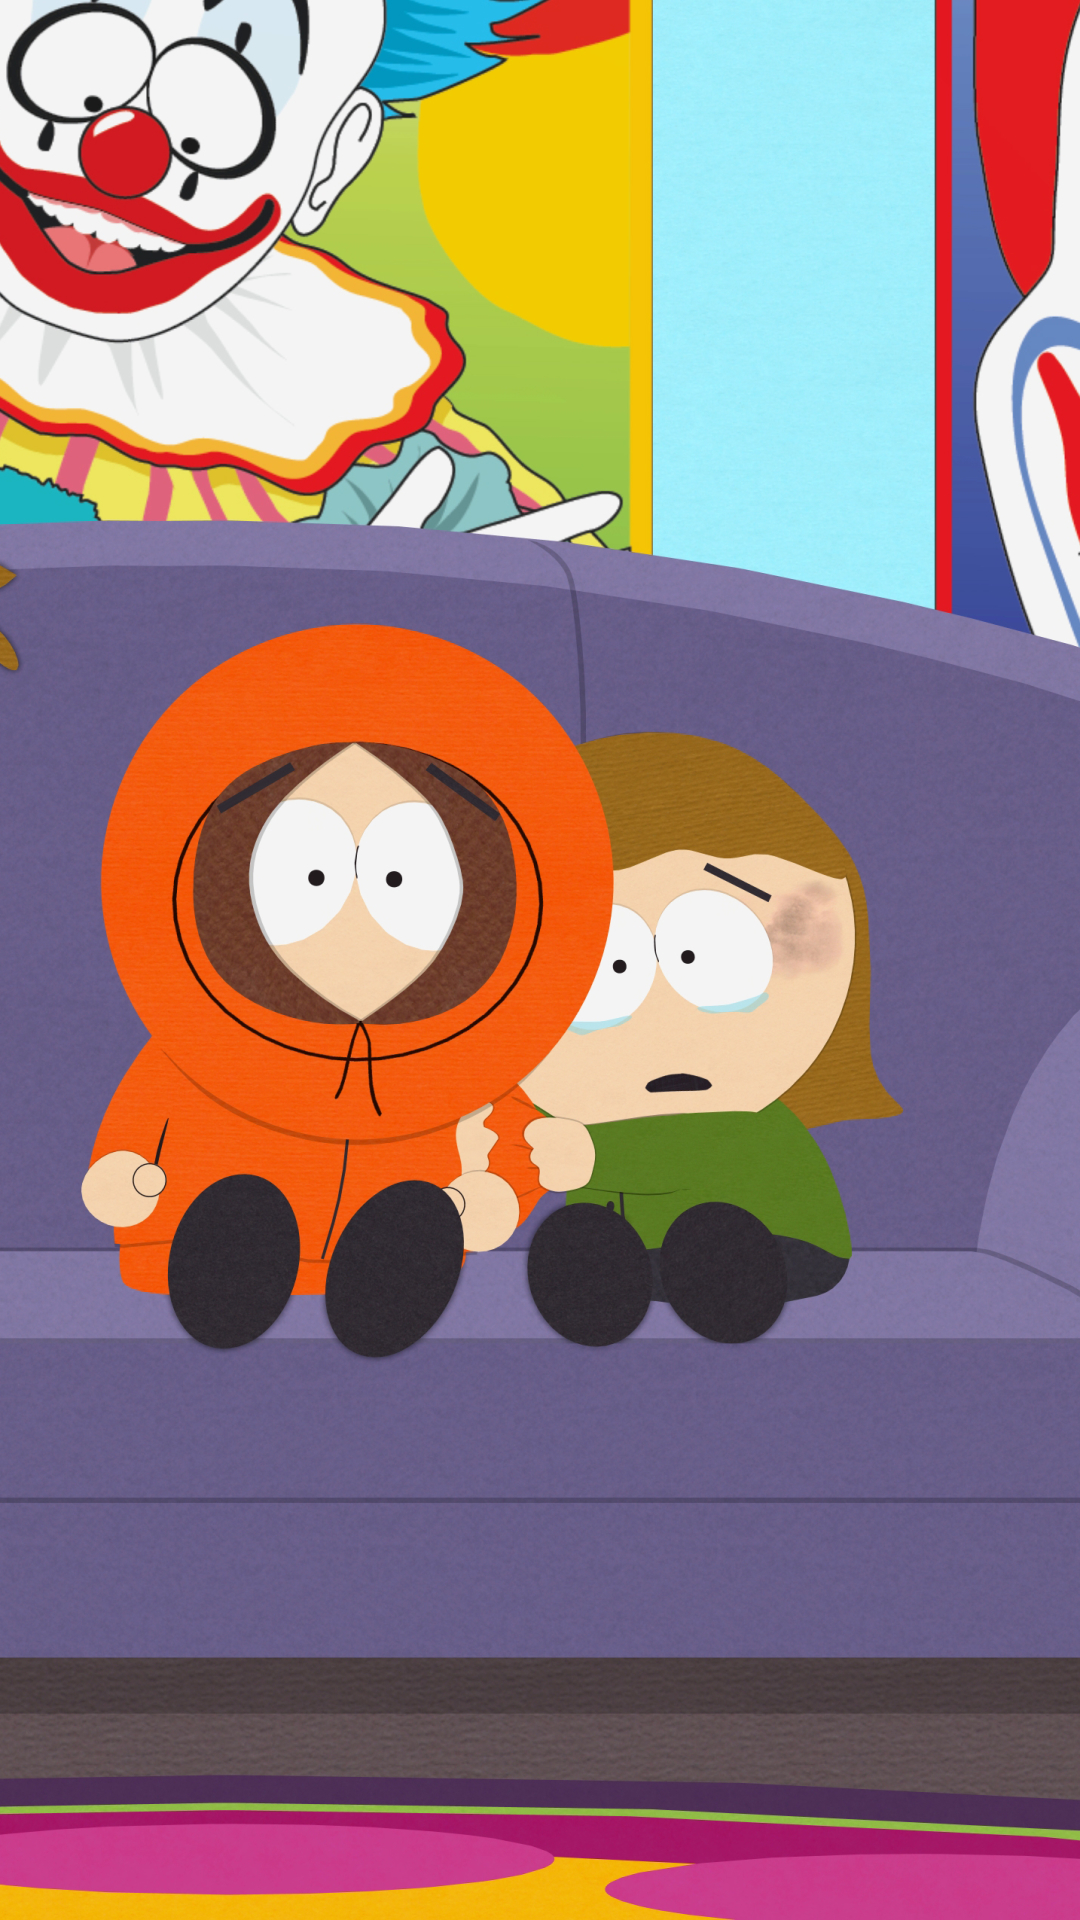 Wallpaper Kenny South Park south park saver Cartman images for desktop  section фильмы  download